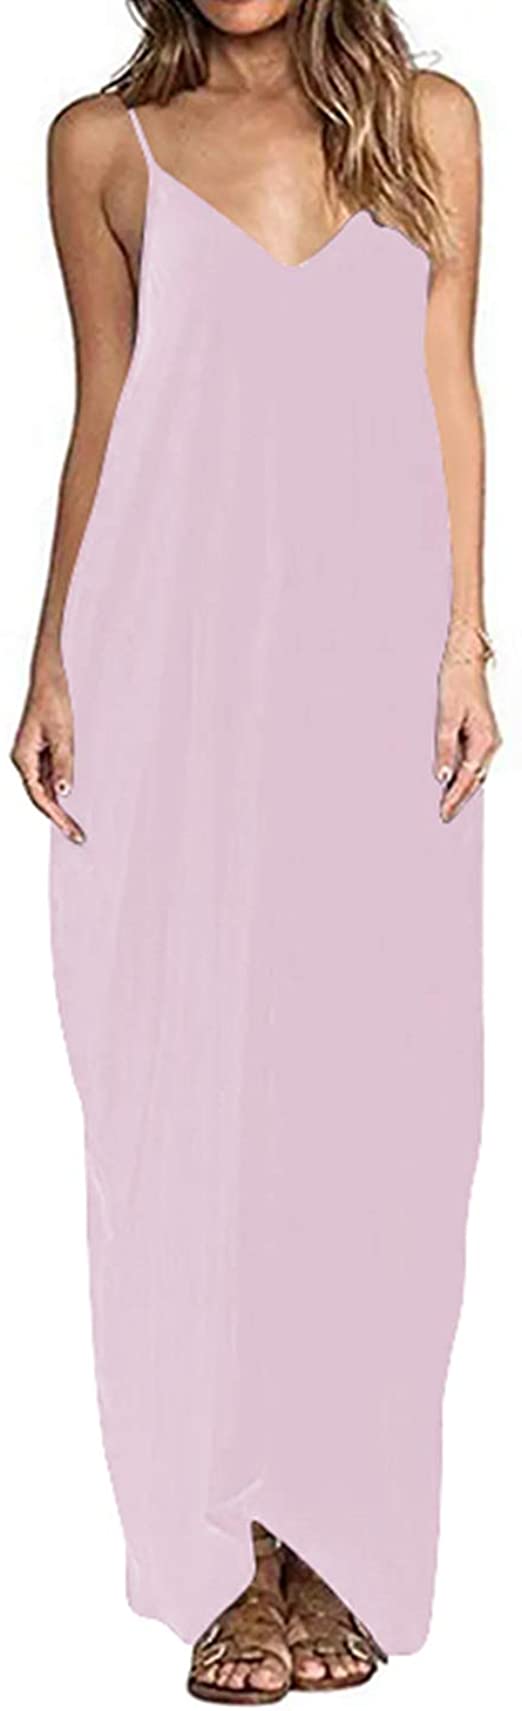 ZANZEA Women's Plus Size Maxi Dress Summer Boho Dress Casual Loose Long Dresses Maxi Sundress Beach Coverup